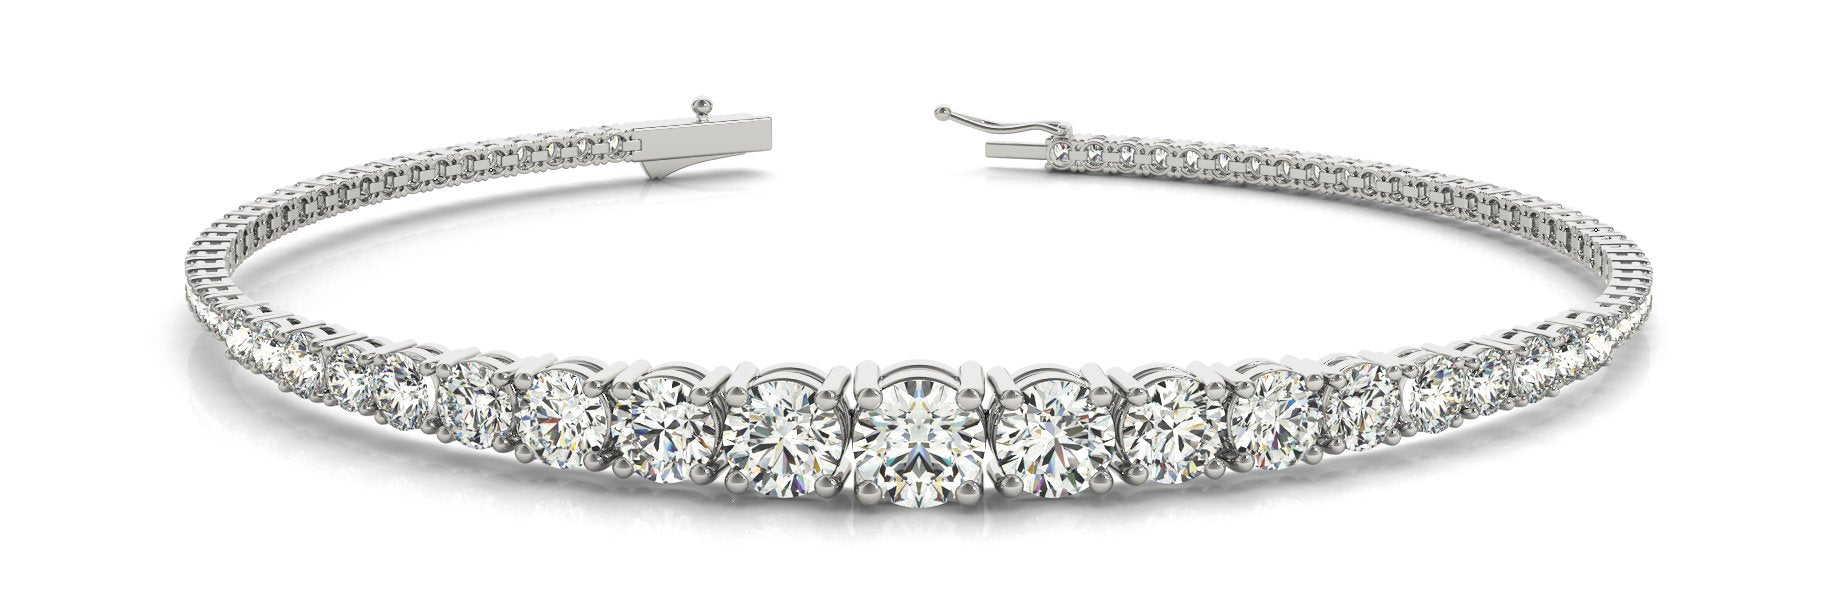 Fancy Diamond Bracelet Ladies 3.51ct tw - 14kt White Gold